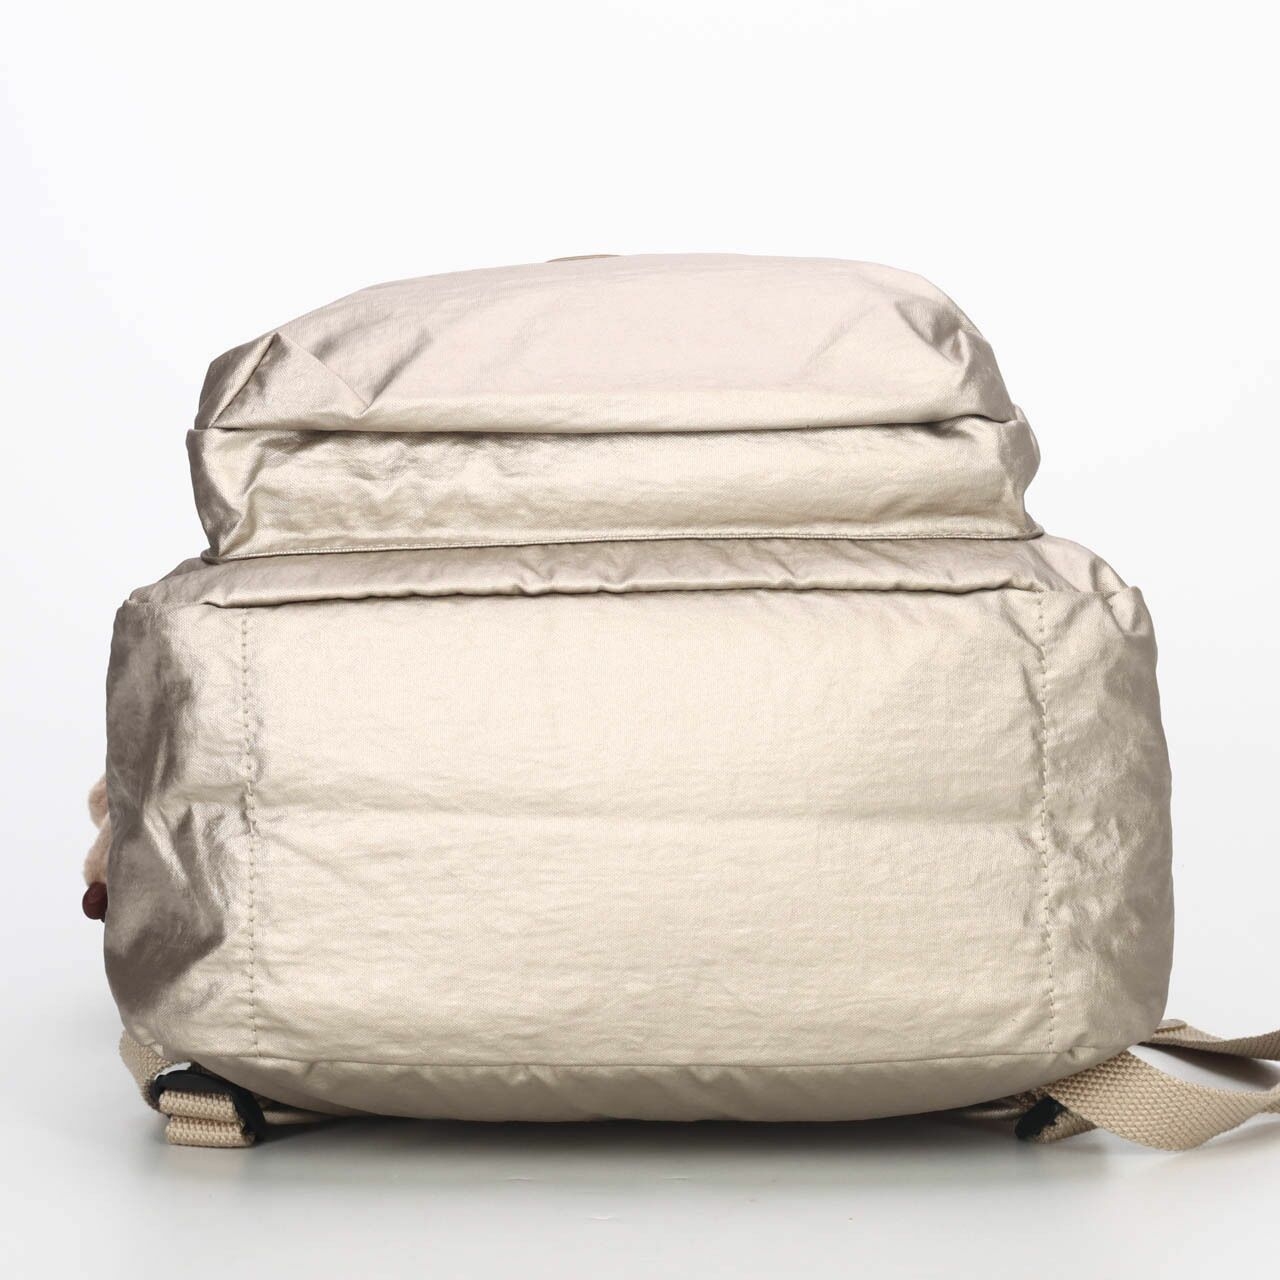 Kipling Clas Seoul Light Brown Metallic Backpack